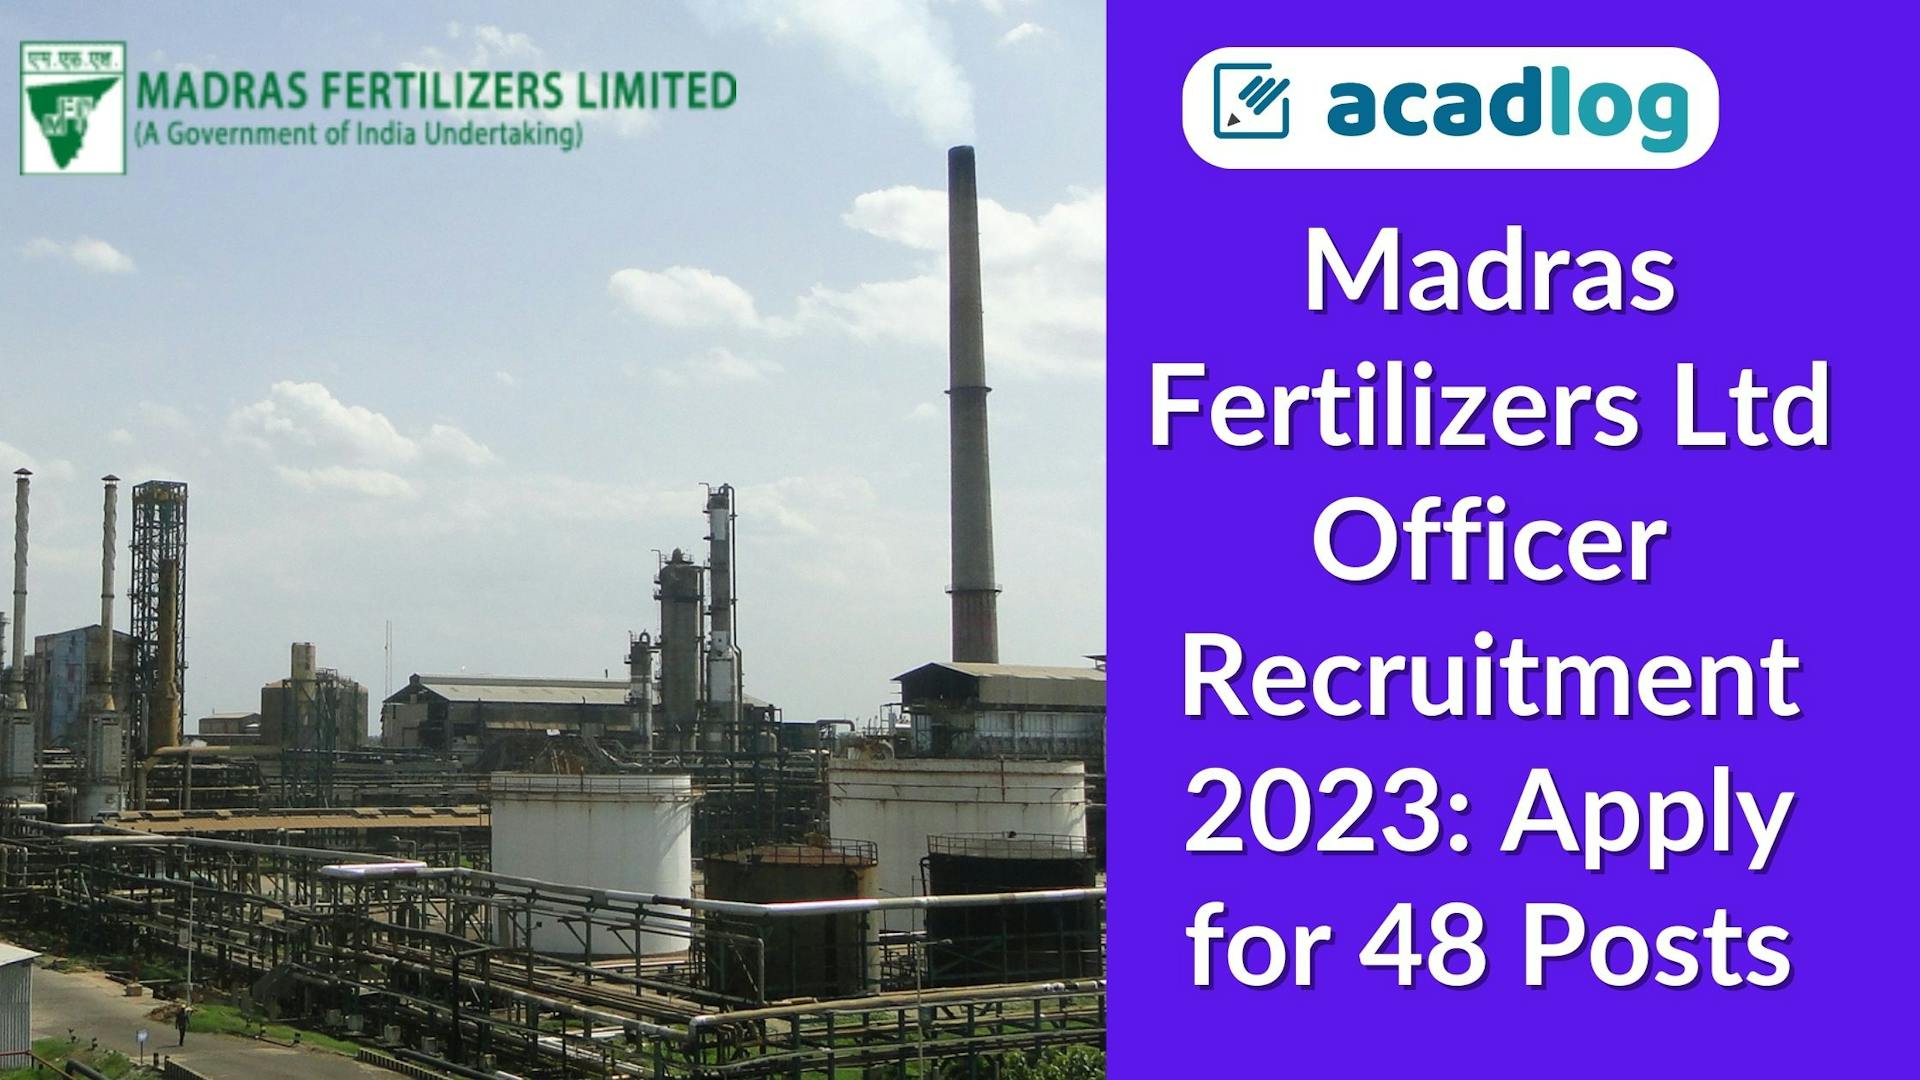 Madras Fertilizers Ltd Officer Recruitment 2023: Apply for 48 Posts